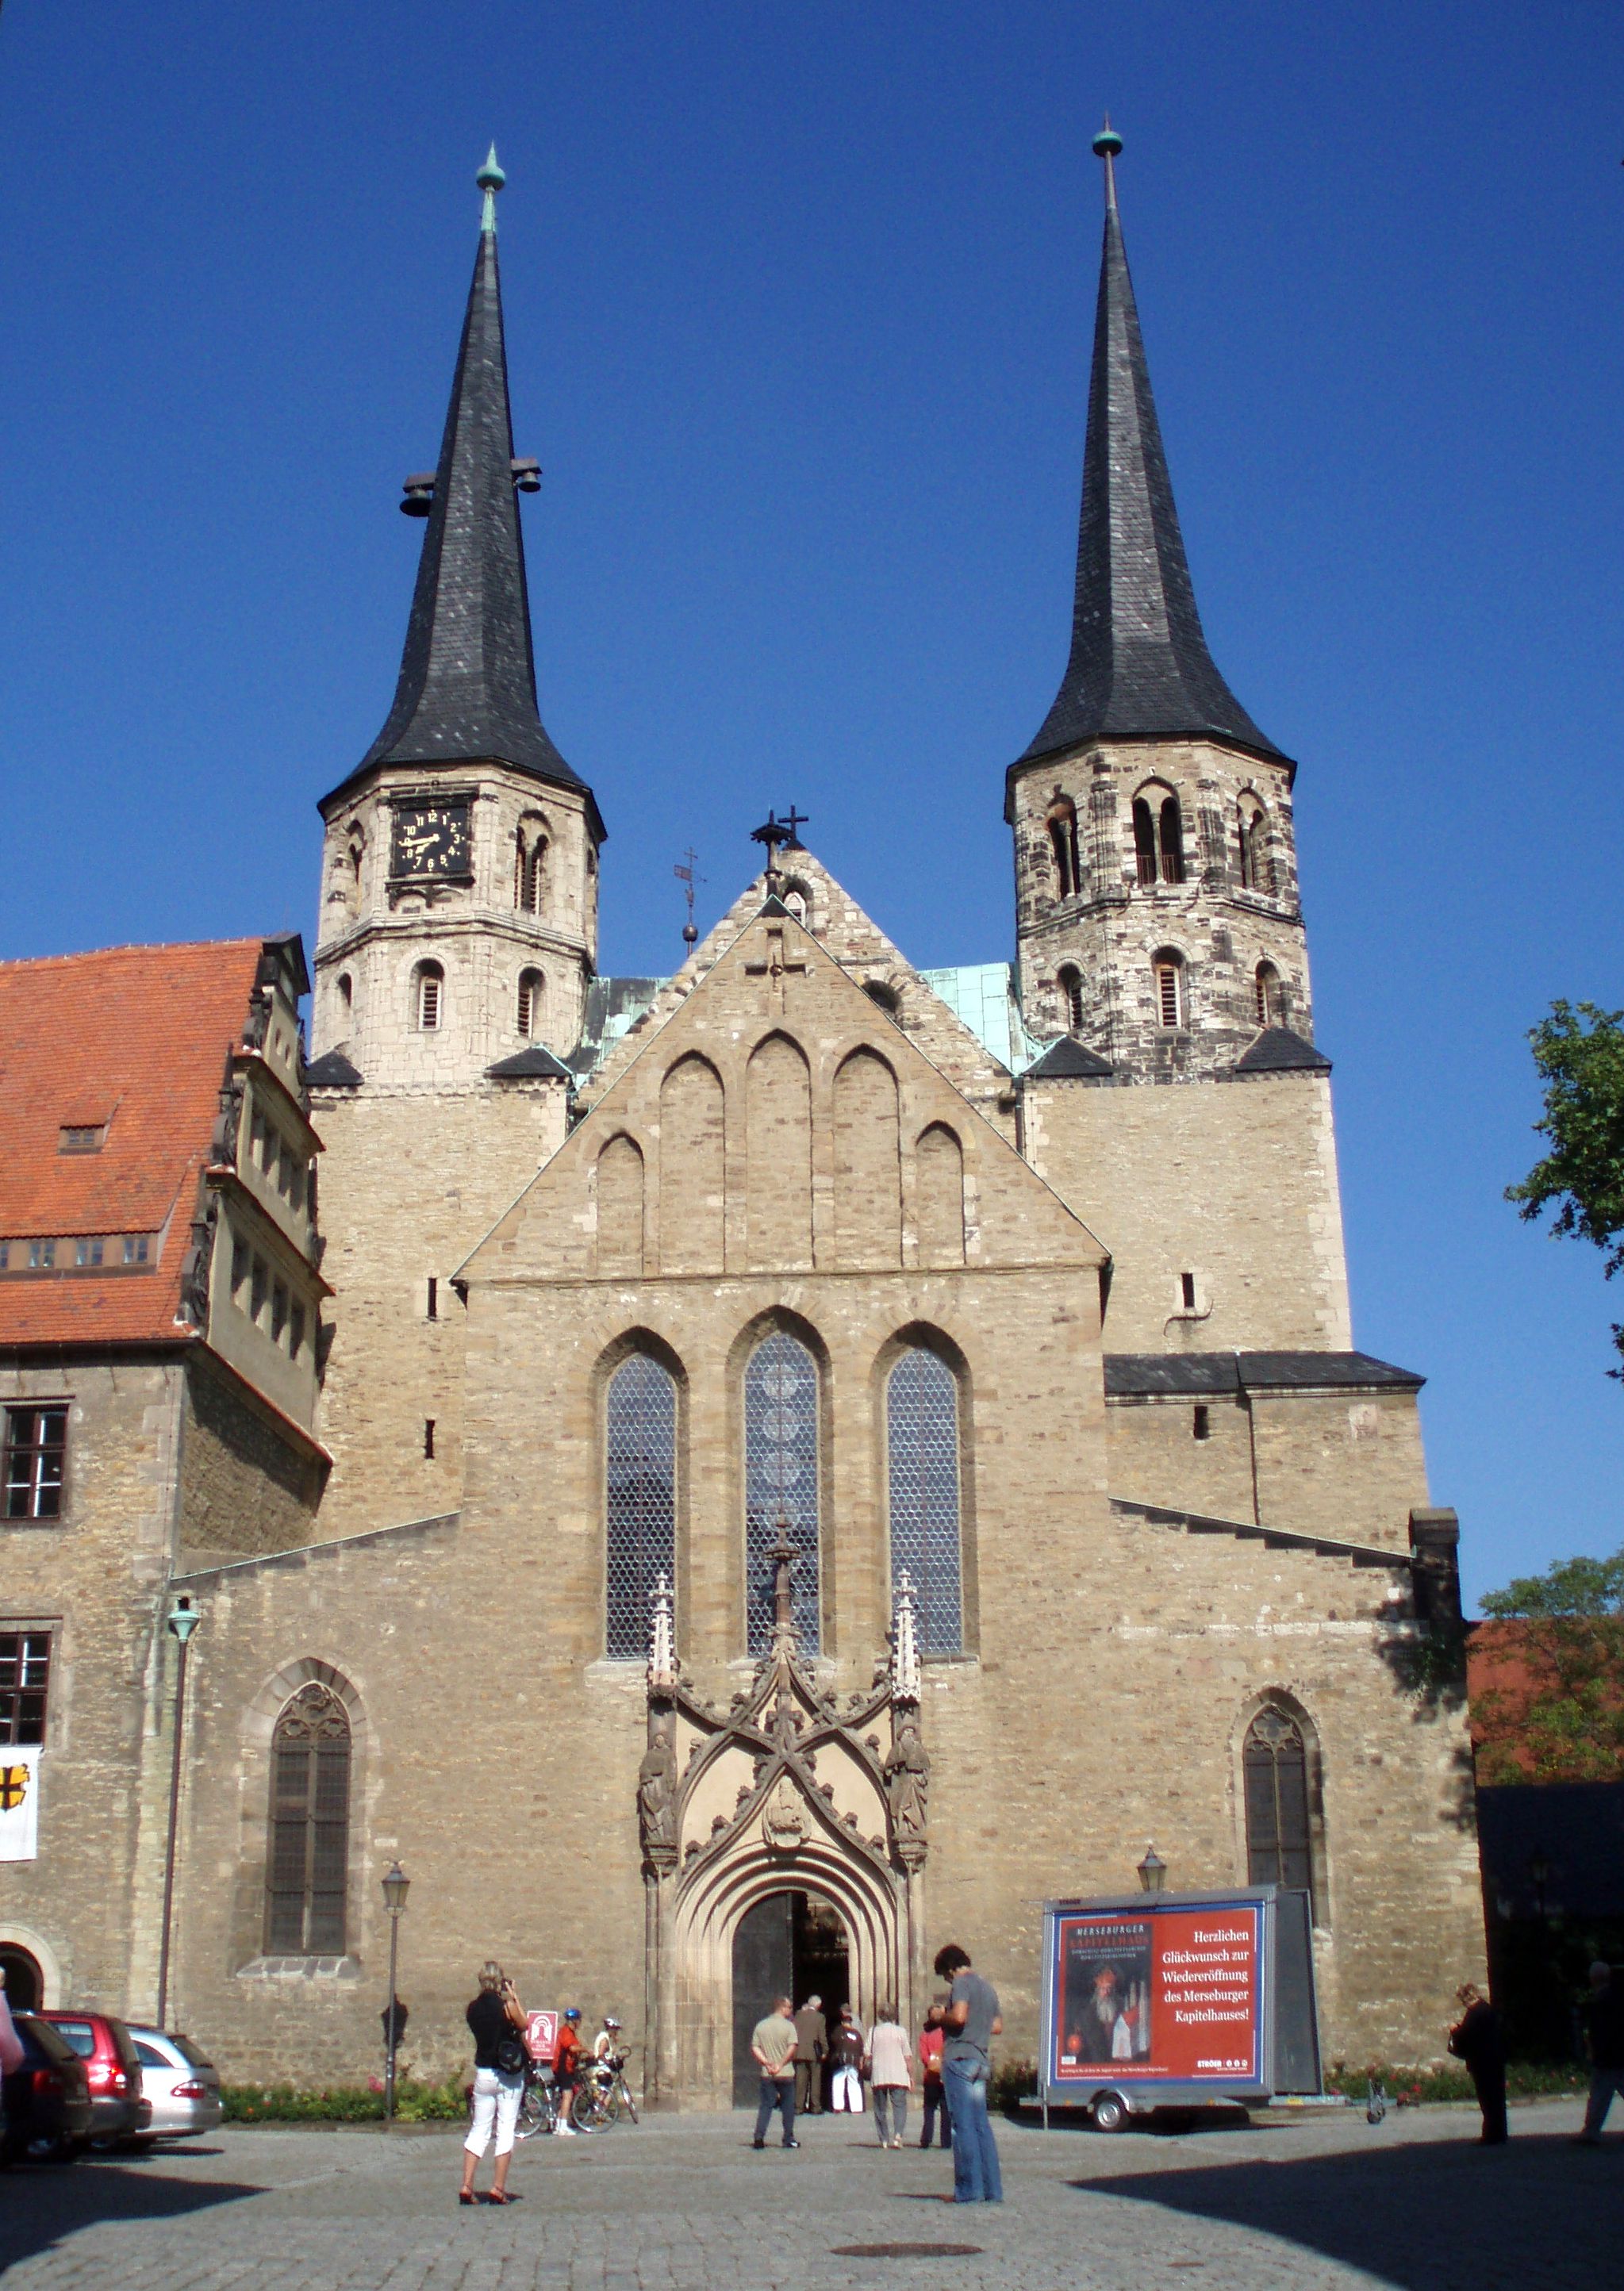 Dom zu Merseburg